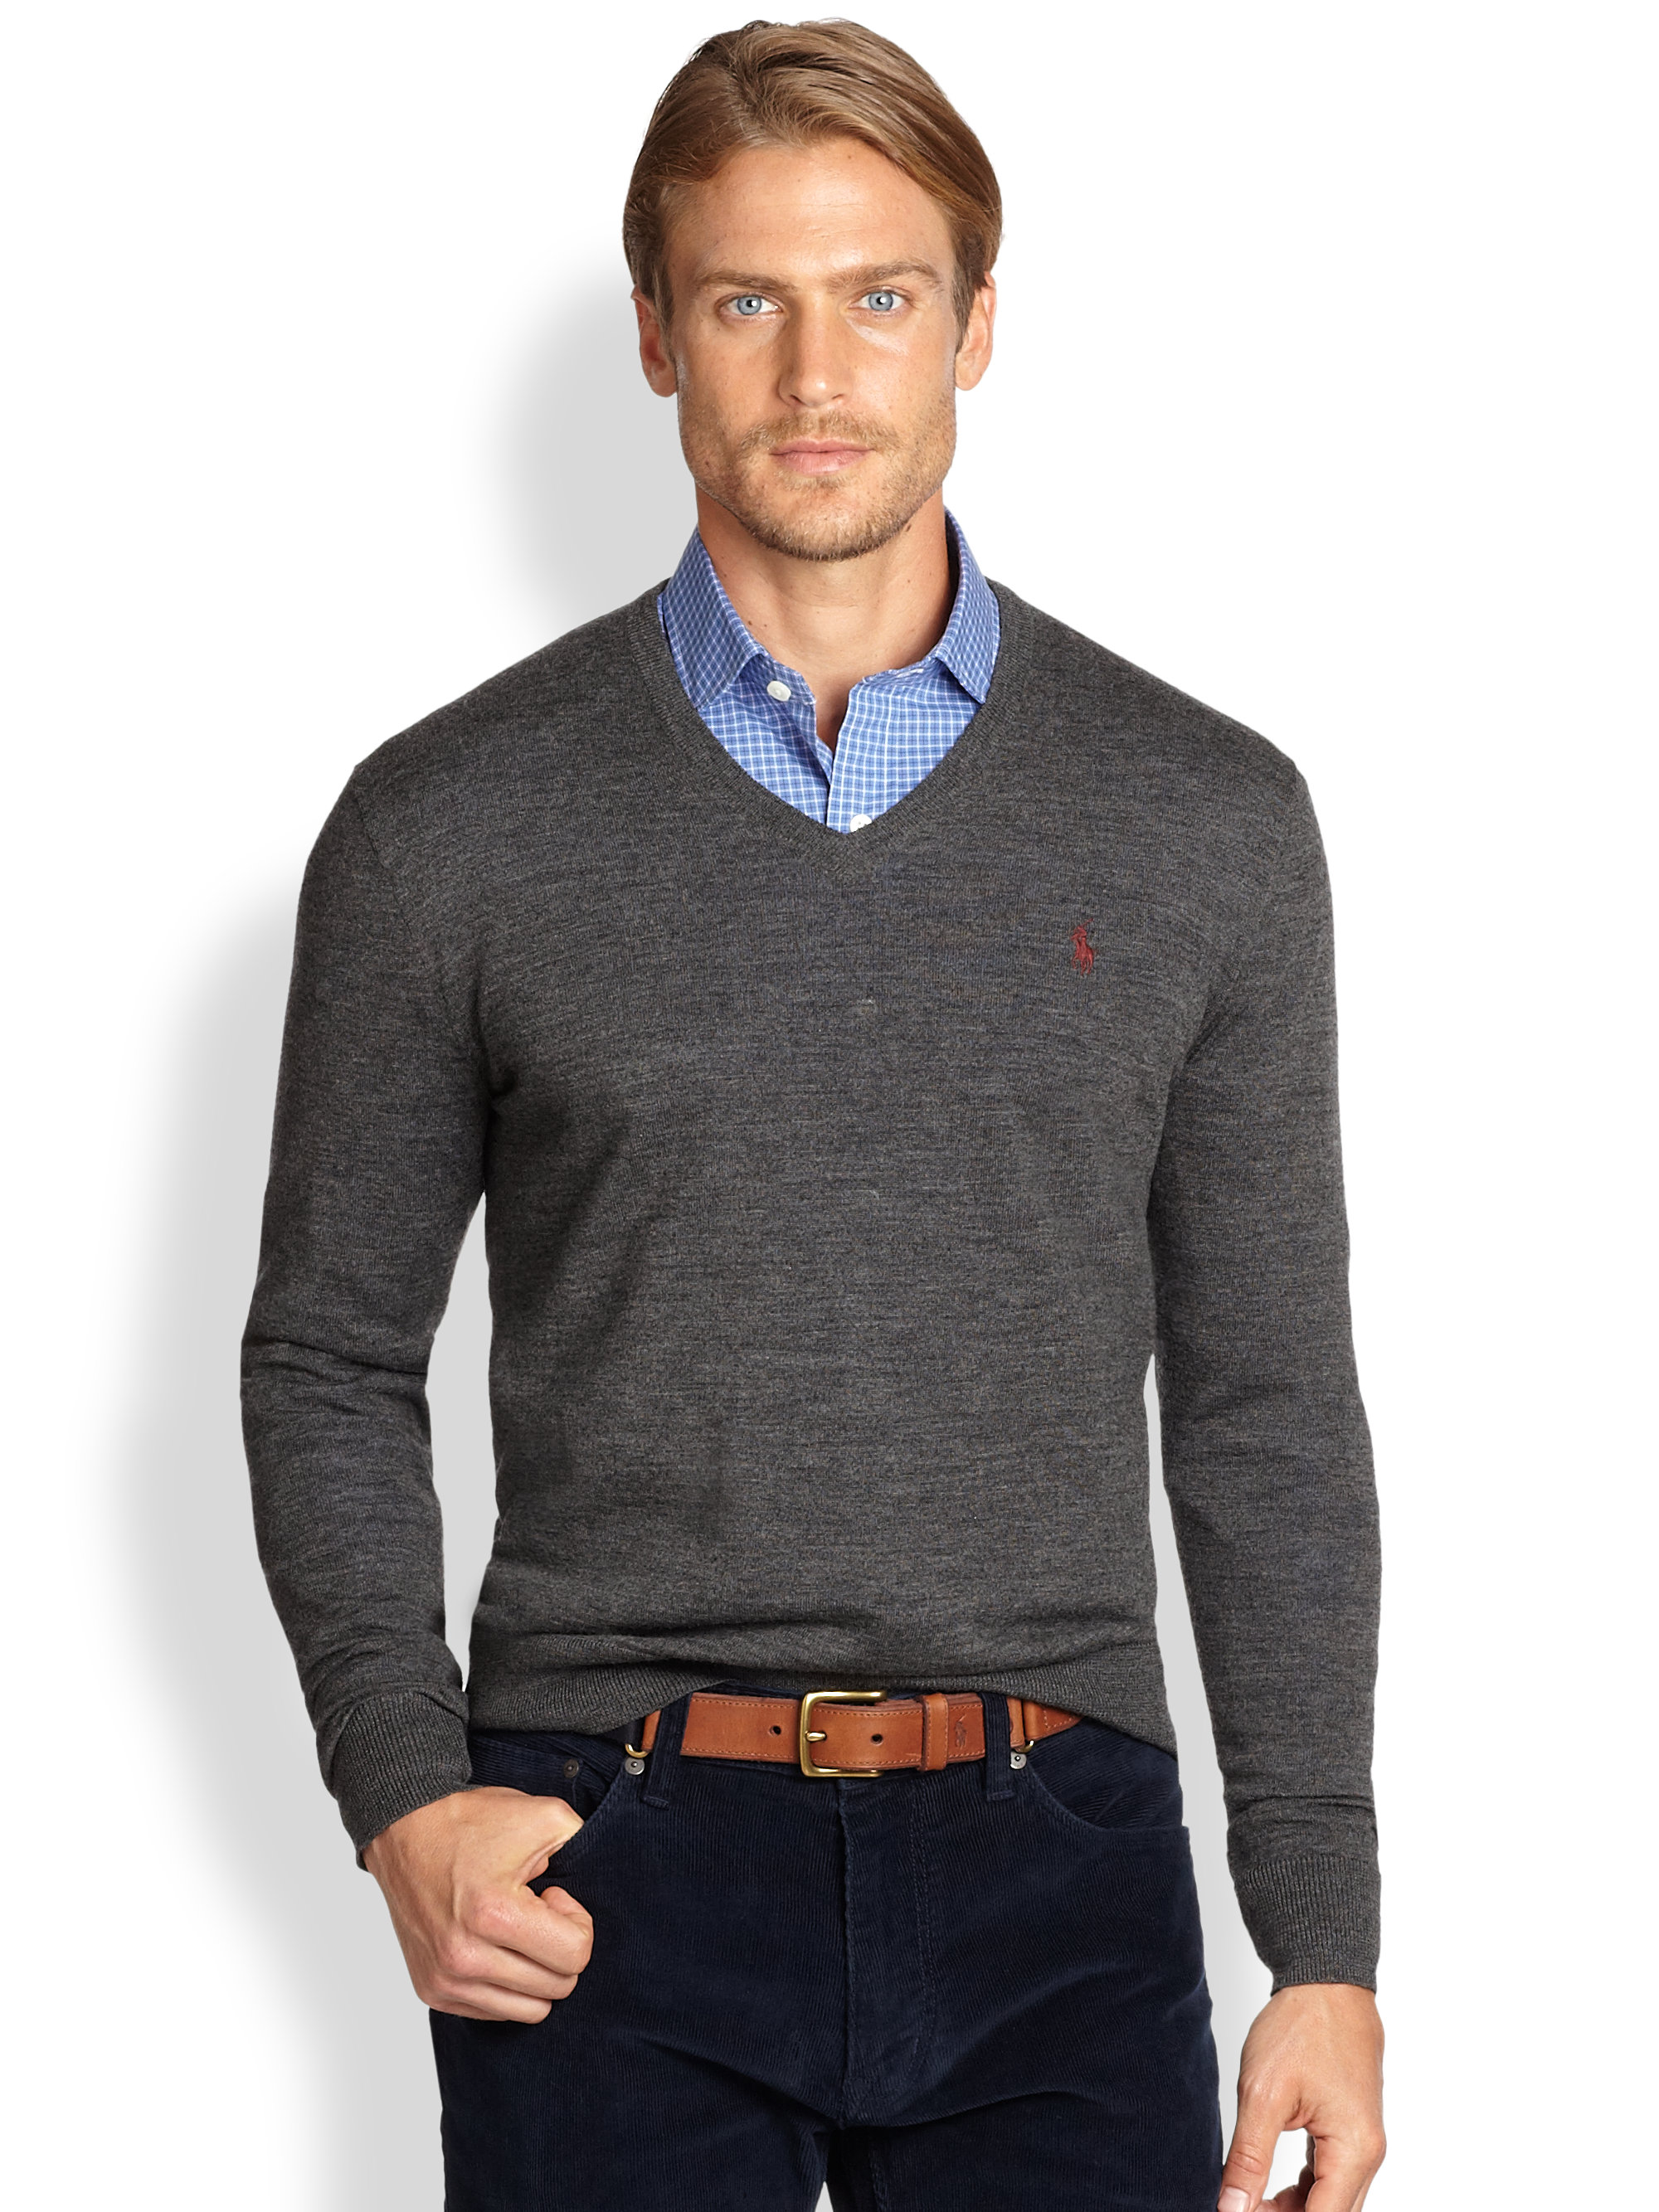 Polo Ralph Lauren Merino Wool Vneck Sweater in Gray for Men - Lyst